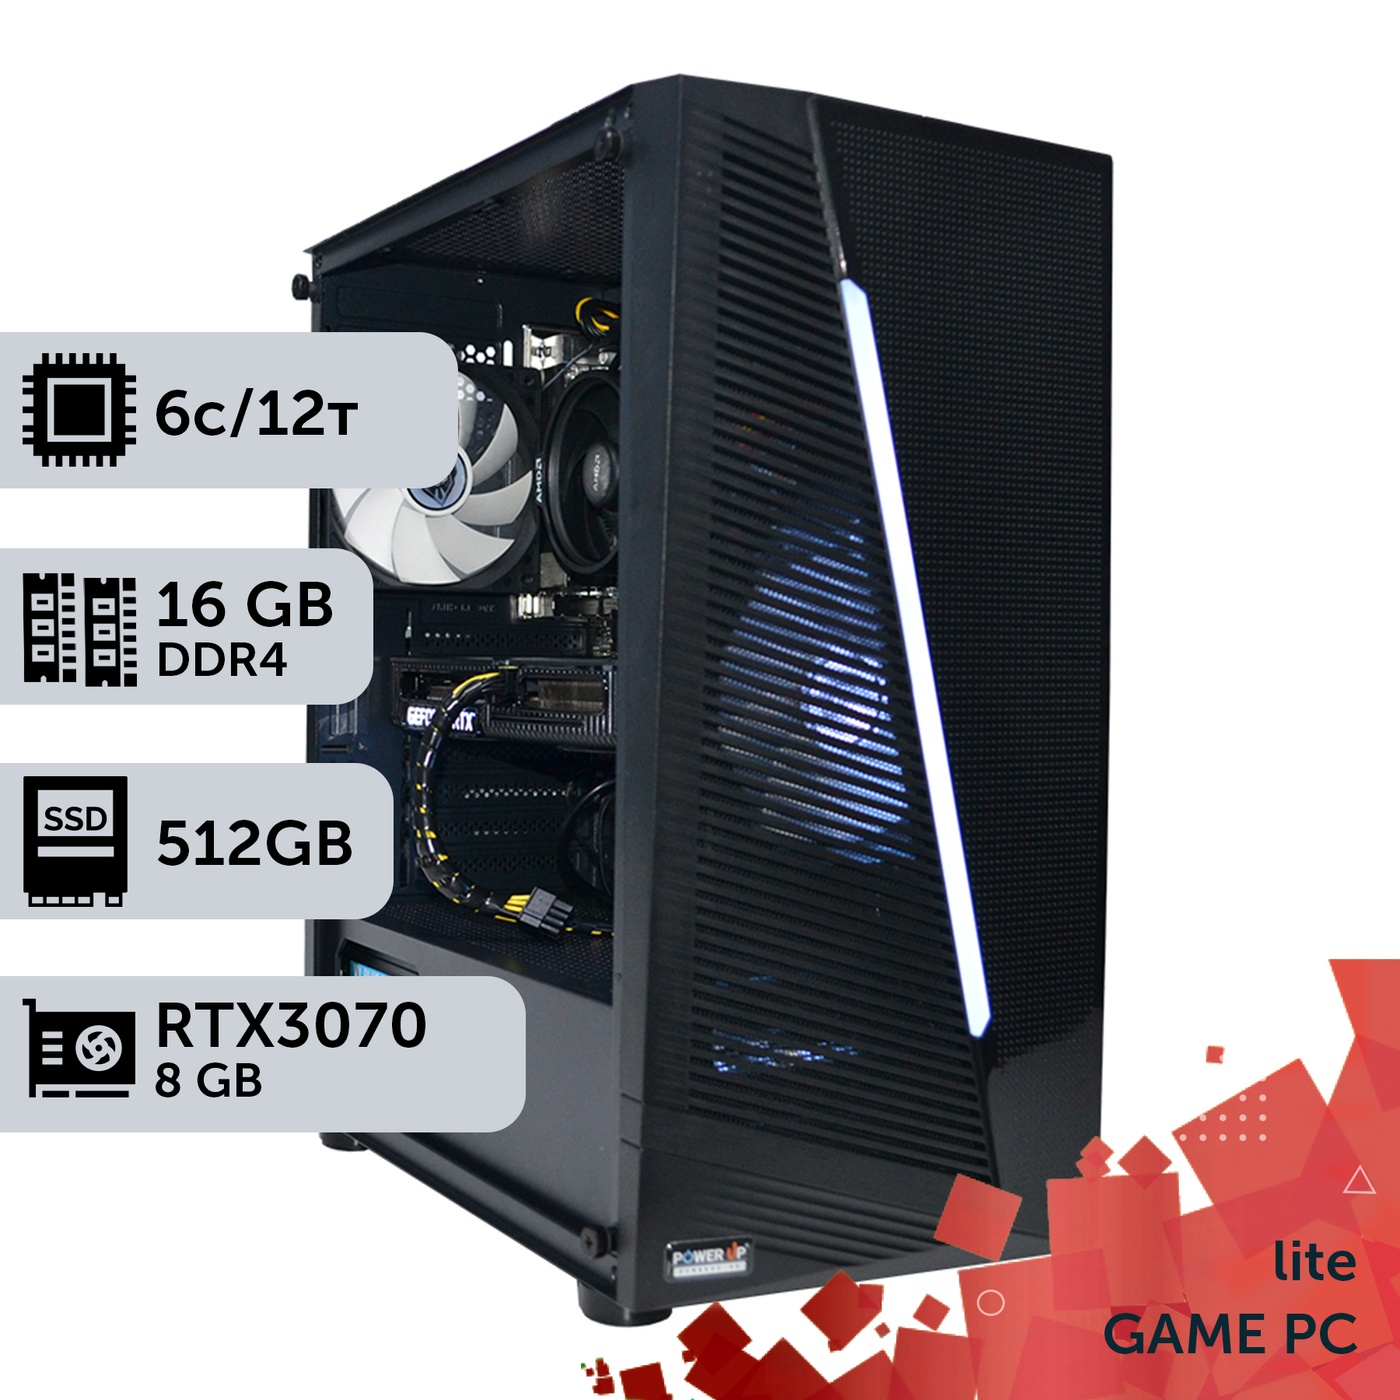 Ігровий комп'ютер GamePC Lite #144 Core i3 12100F/16 GB/HDD 1 TB/SSD 512GB/GeForce RTX 3070 8GB